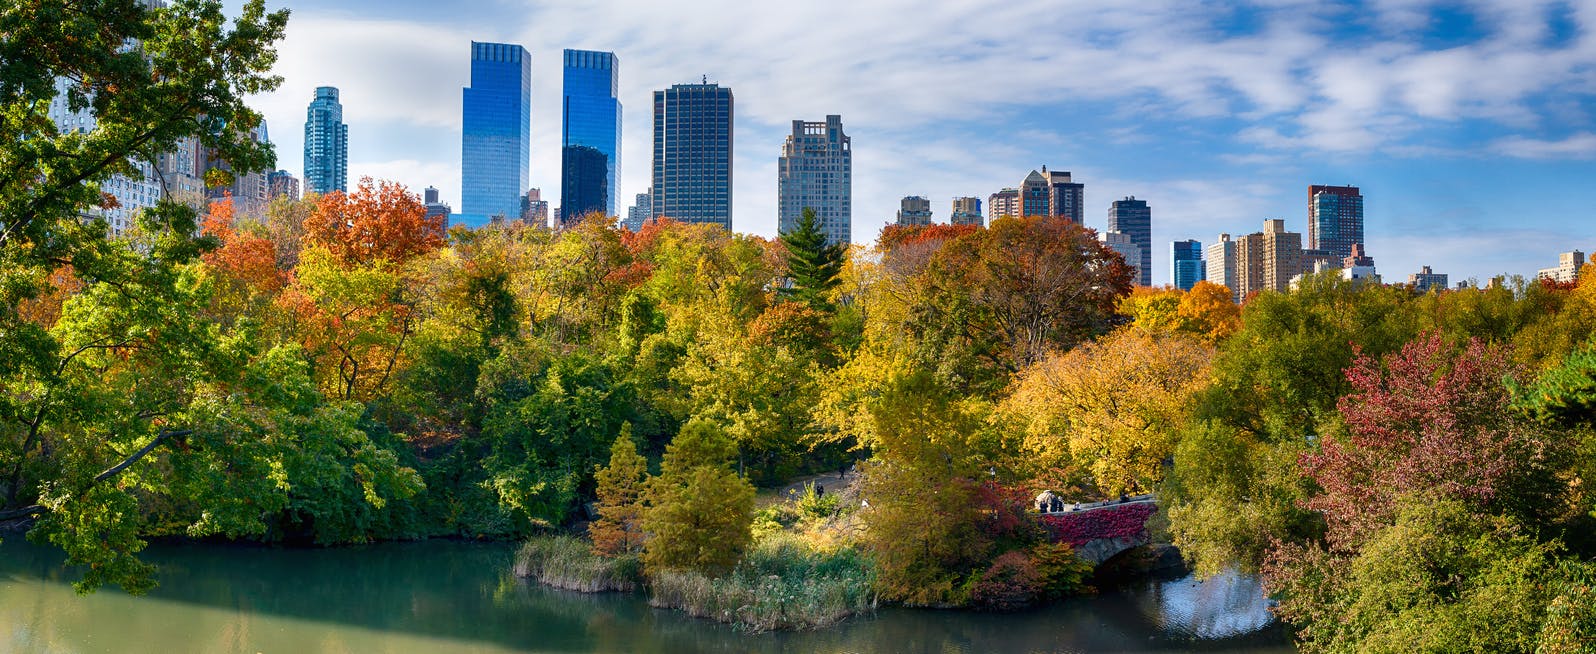 The 15 Best Botanical Gardens in New York - ProFlowers Blog